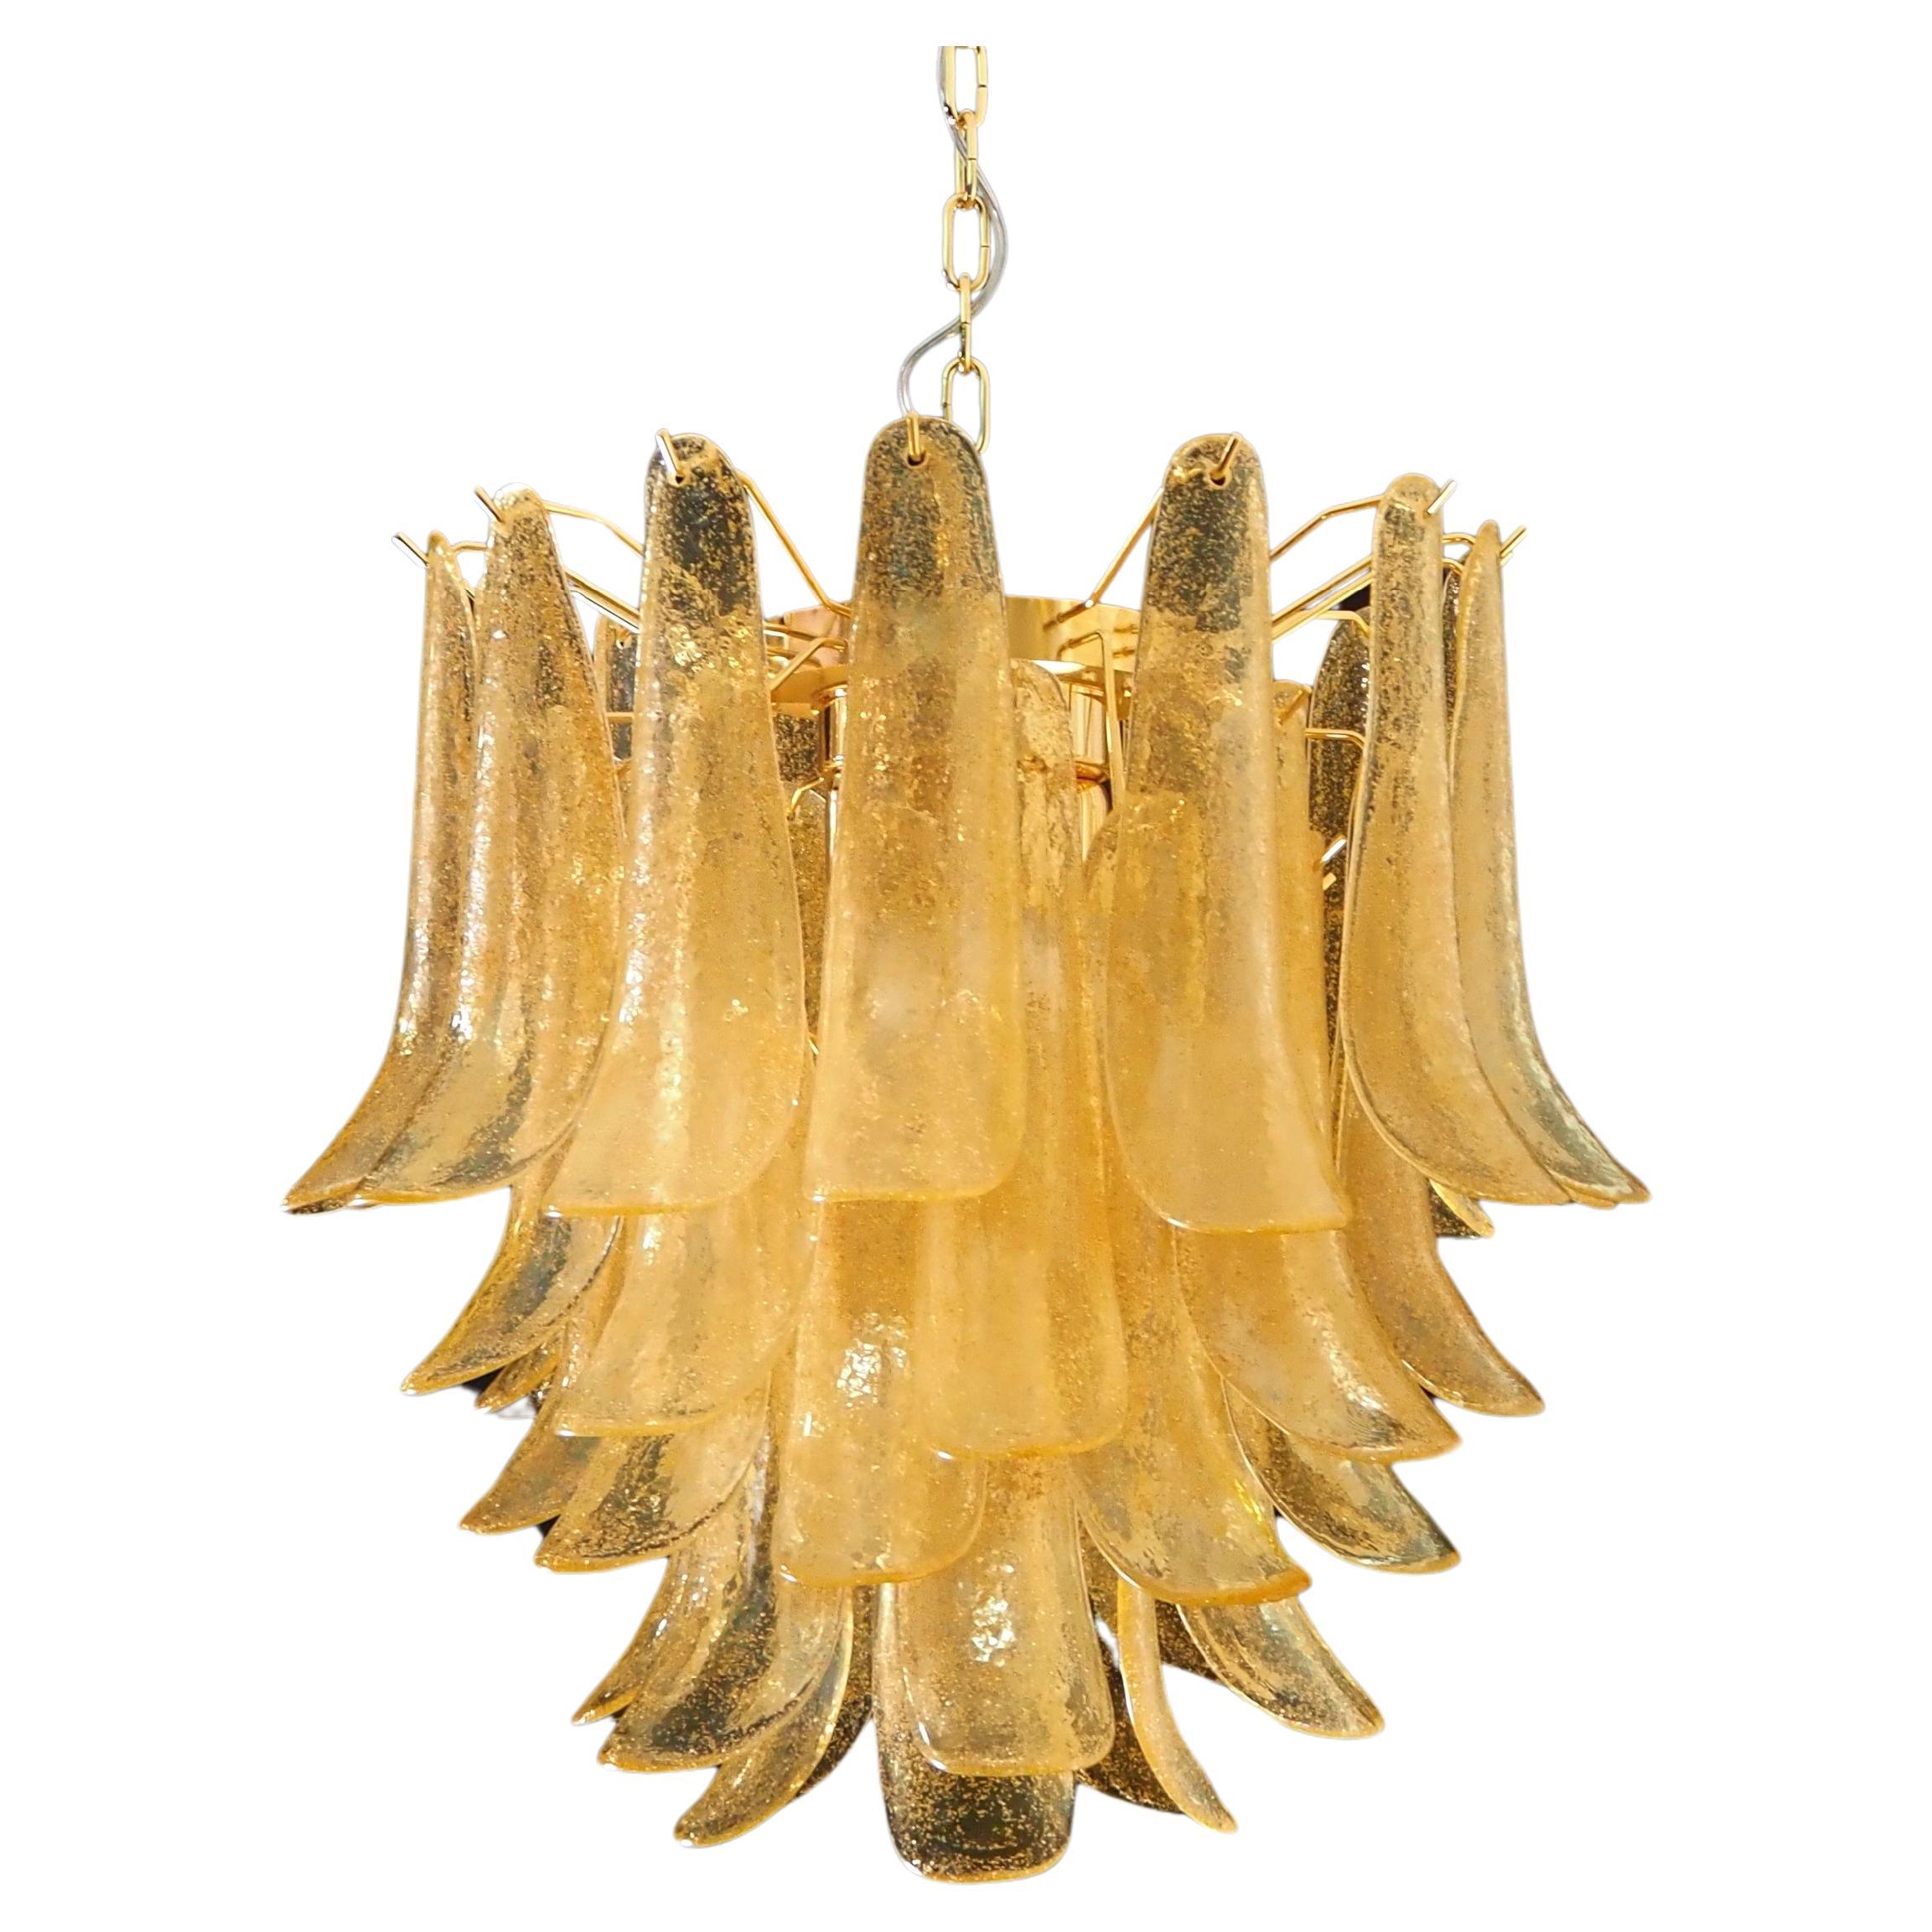 Italian vintage Murano chandelier - Mazzega - 41 GOLD glass petals